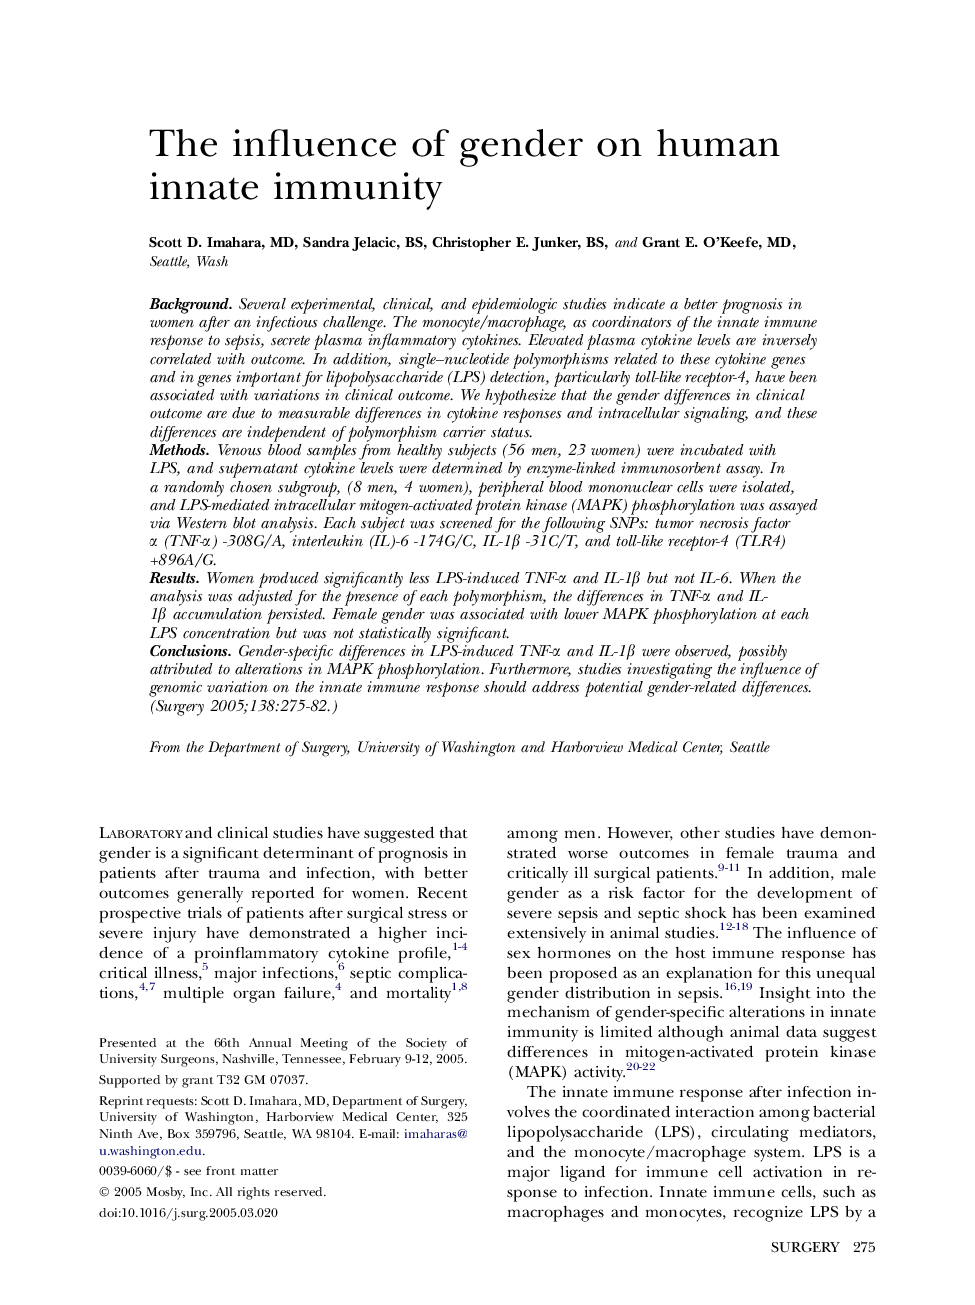 The influence of gender on human innate immunity